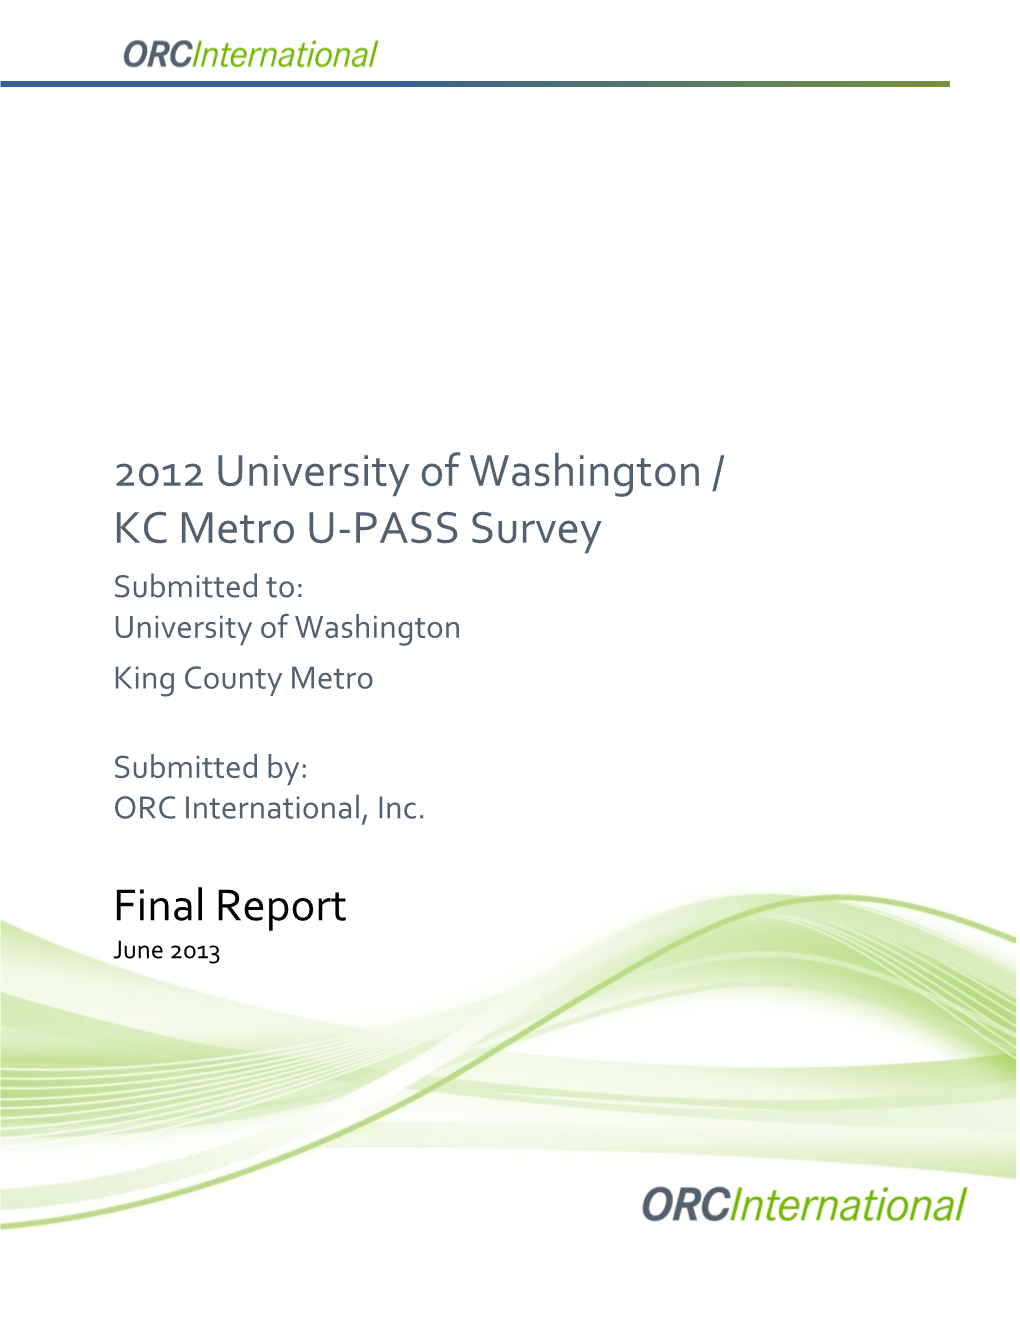 2012 University of Washington / KC Metro U-PASS Survey Final Report